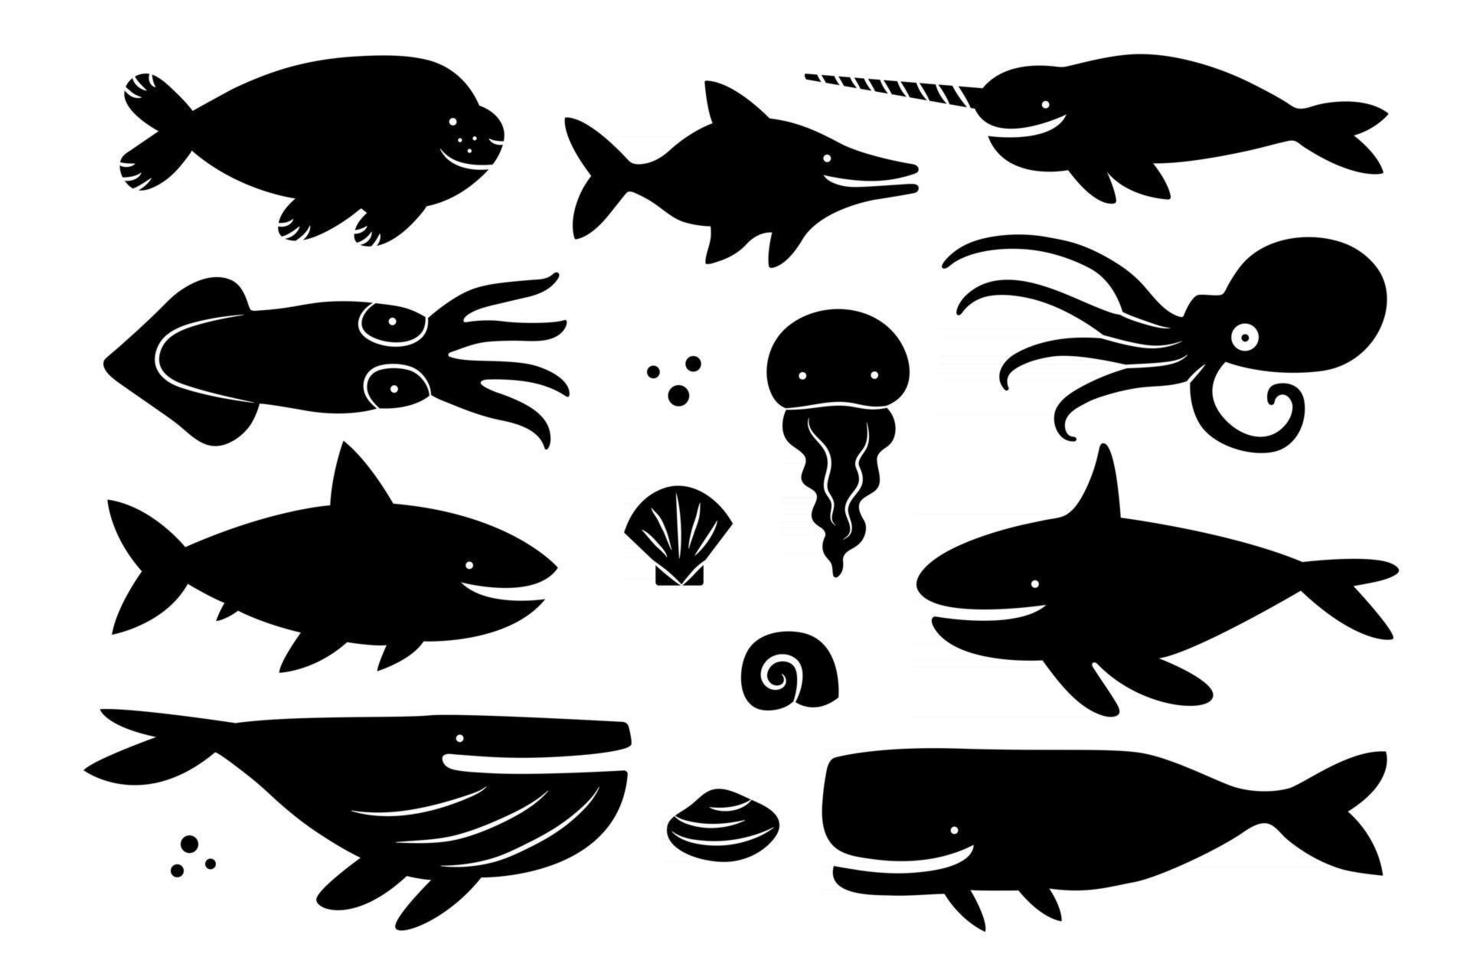 Sea creatures, animals, fishes. Black silhouette set. Cut board template design. vector